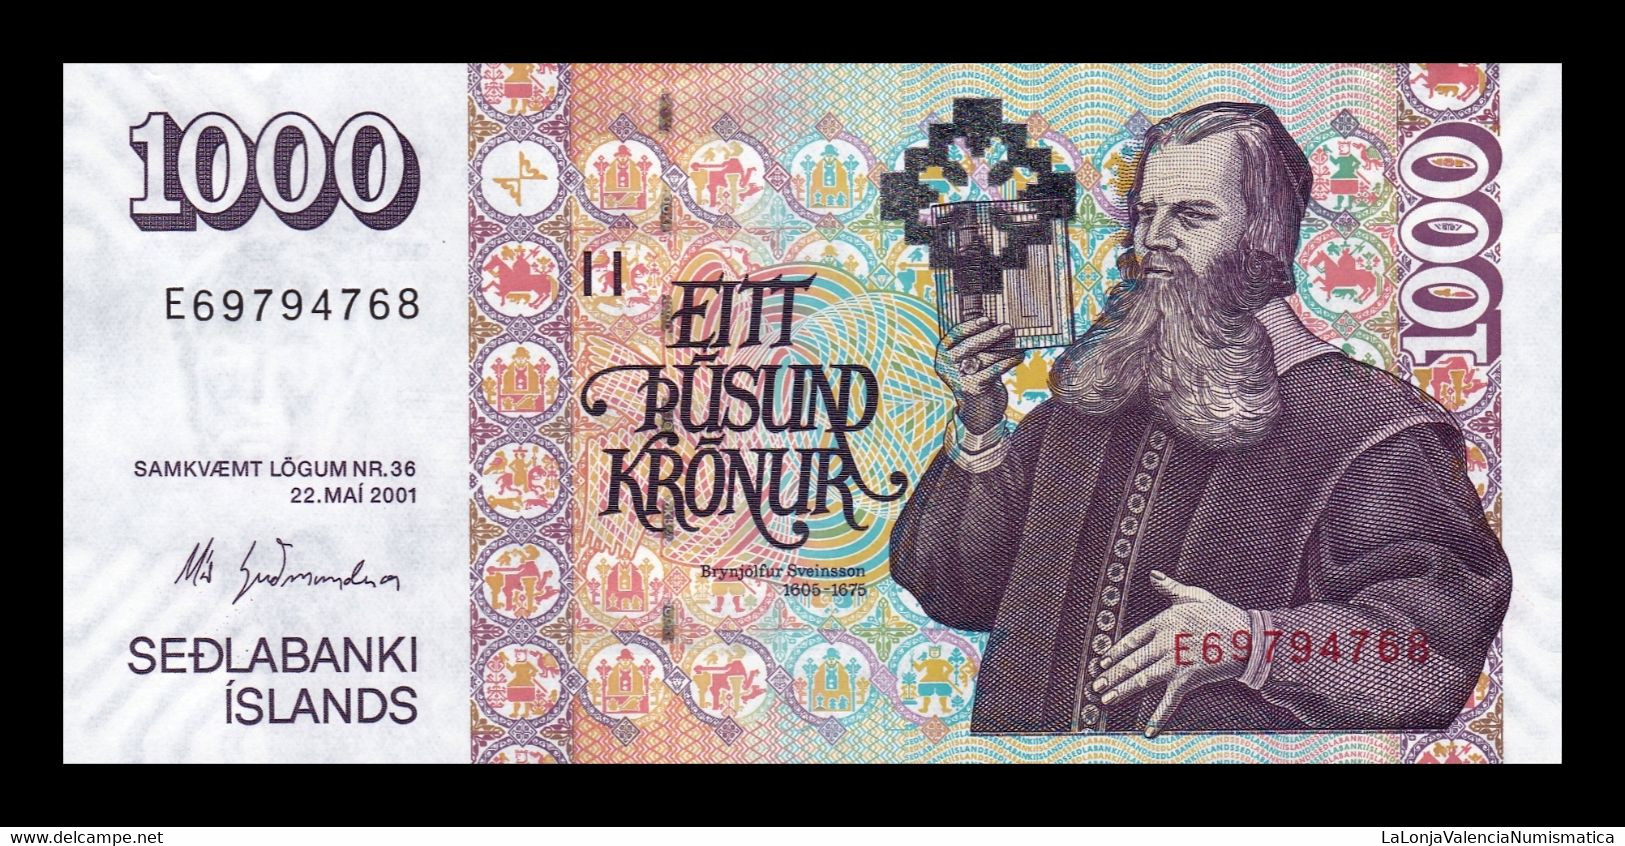 Islandia Iceland Lot 10 Banknotes 1000 Kronur 2001 (2013) Pick 59e SC UNC - Islande